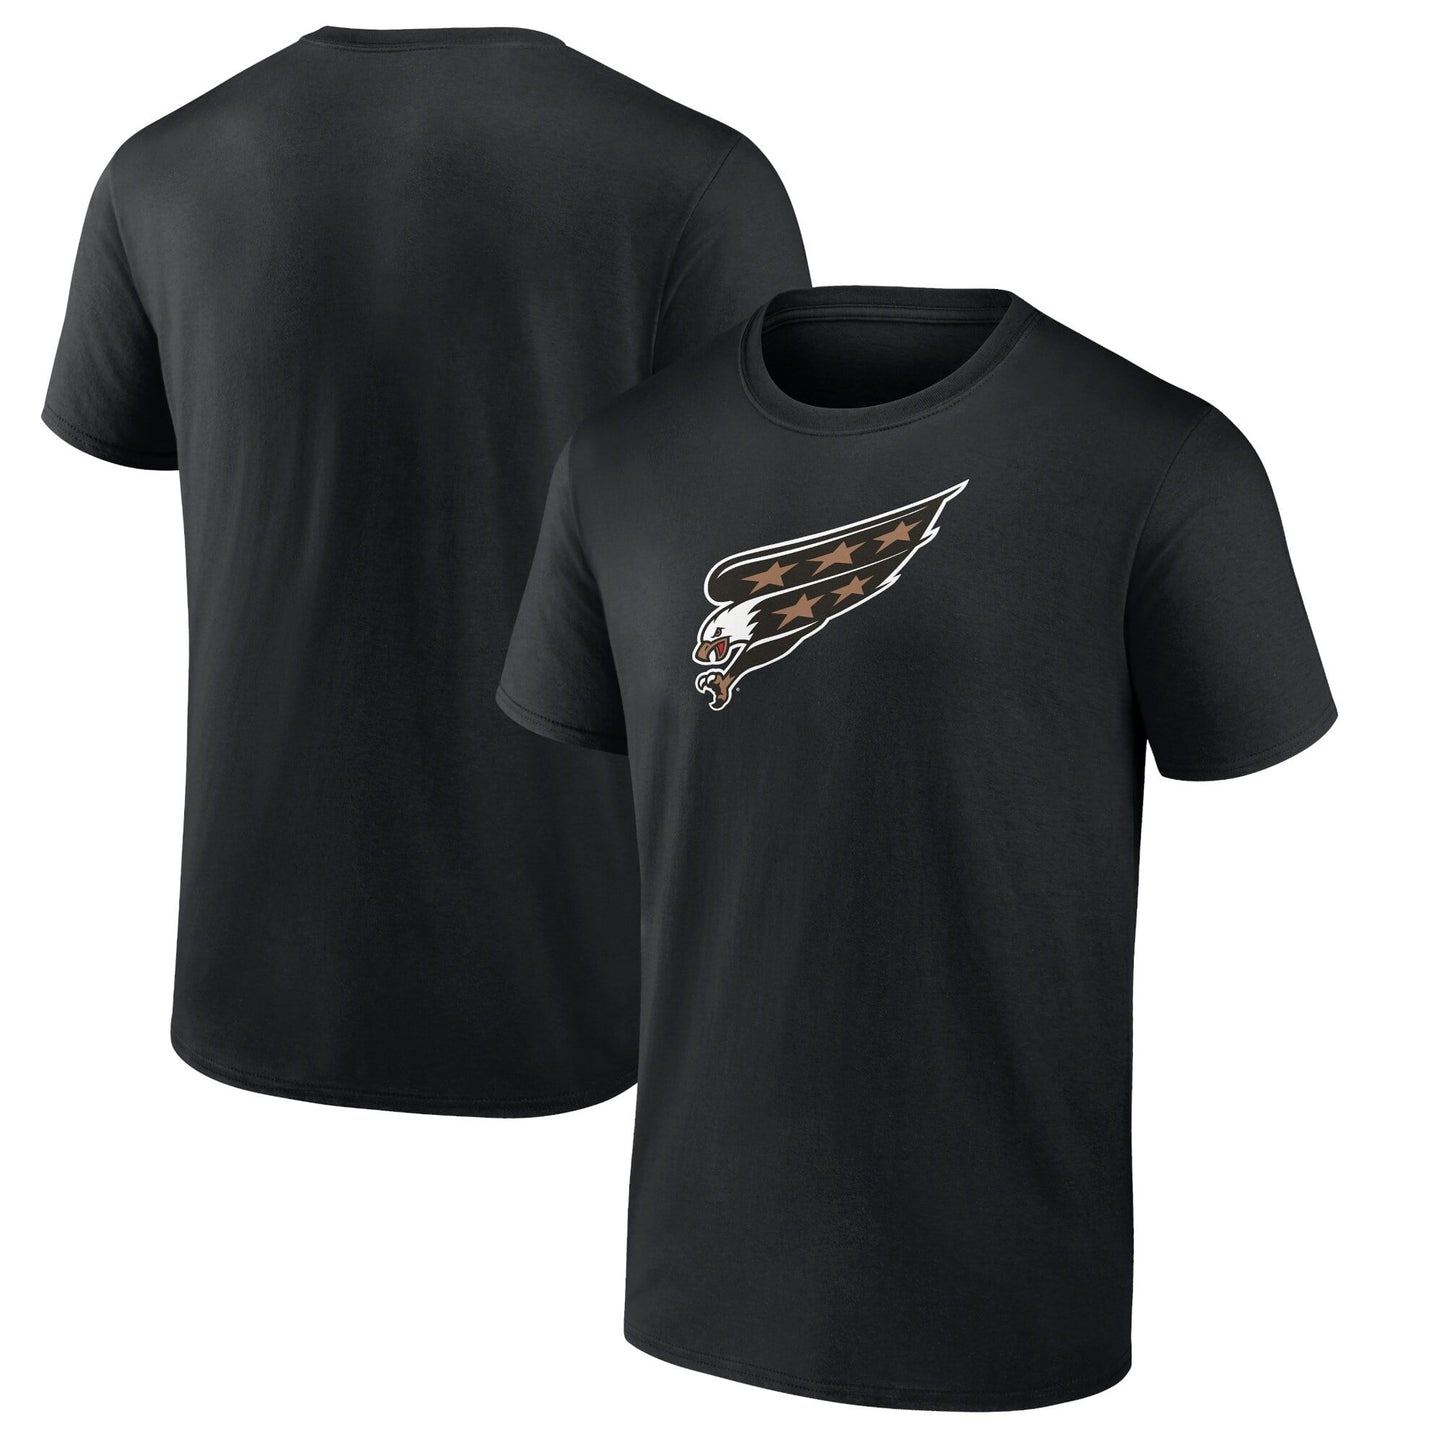 Men's Fanatics Branded  Black Washington Capitals Special Edition 2.0 Graphic T-shirt